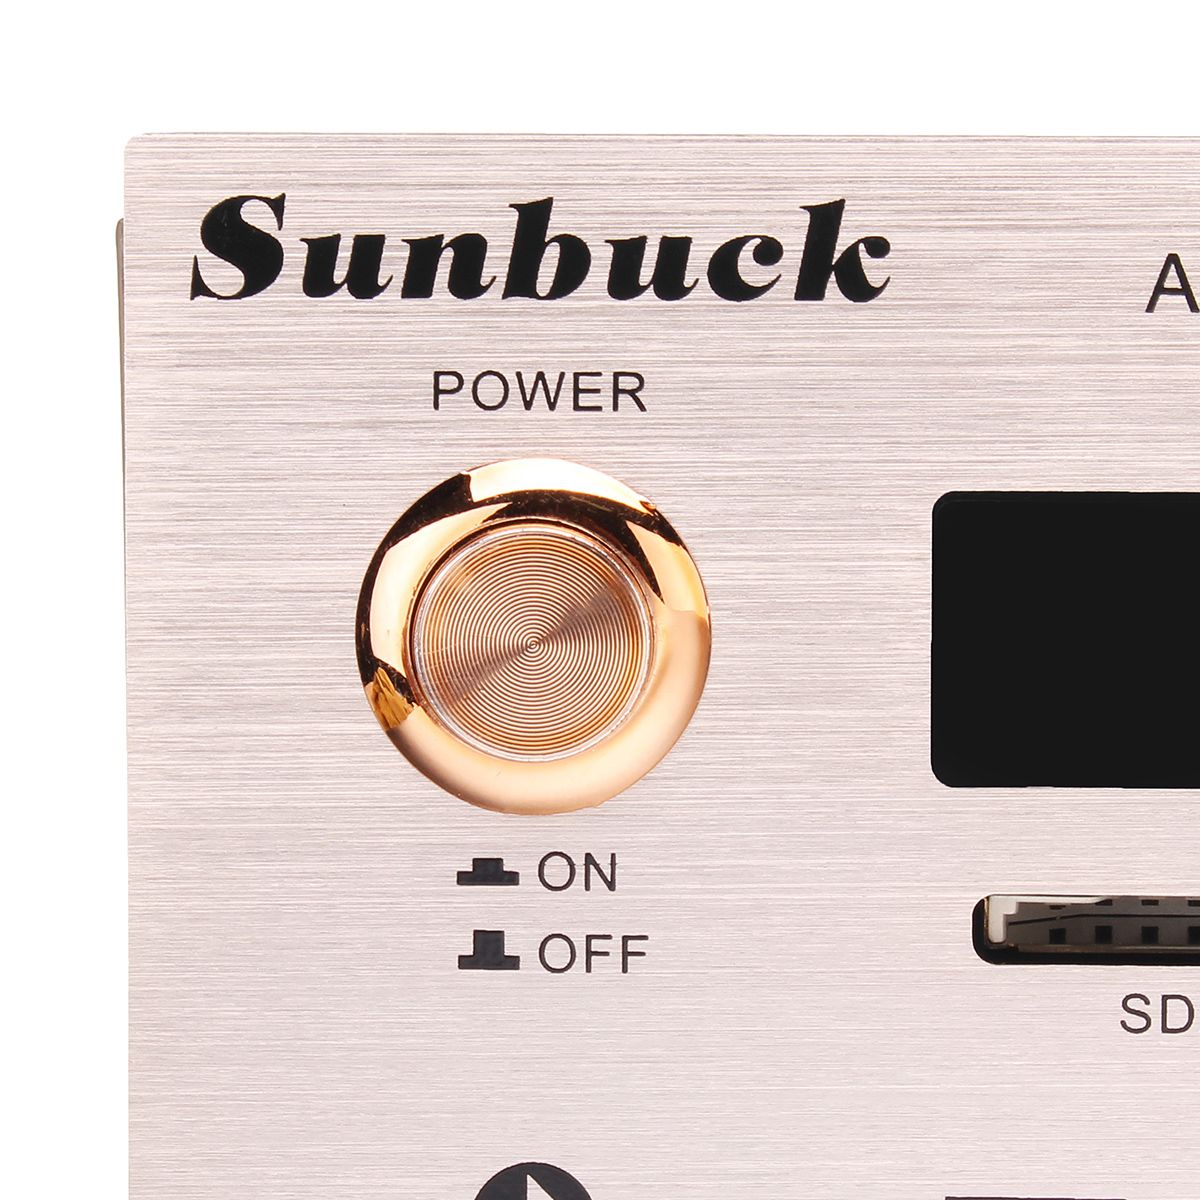 Sunbuck-AV-580USBBT-bluetooth40-5CH-400W400W120W-Amplifier-Support-SD-Card-USB-FM-Microphone-1372535